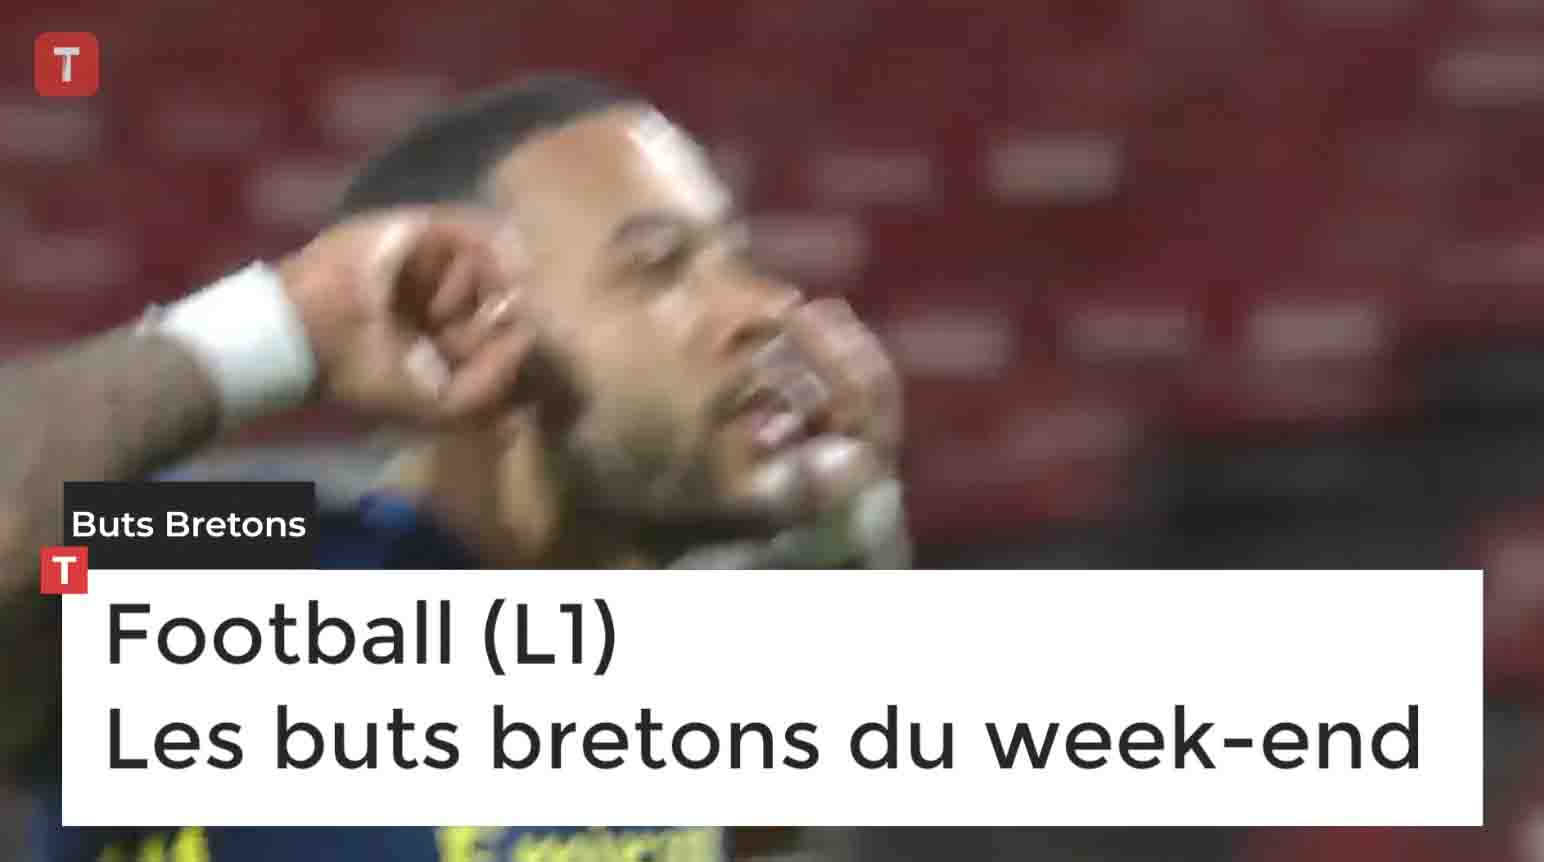 Football (L1) Les buts bretons du week-end (Le Télégramme)